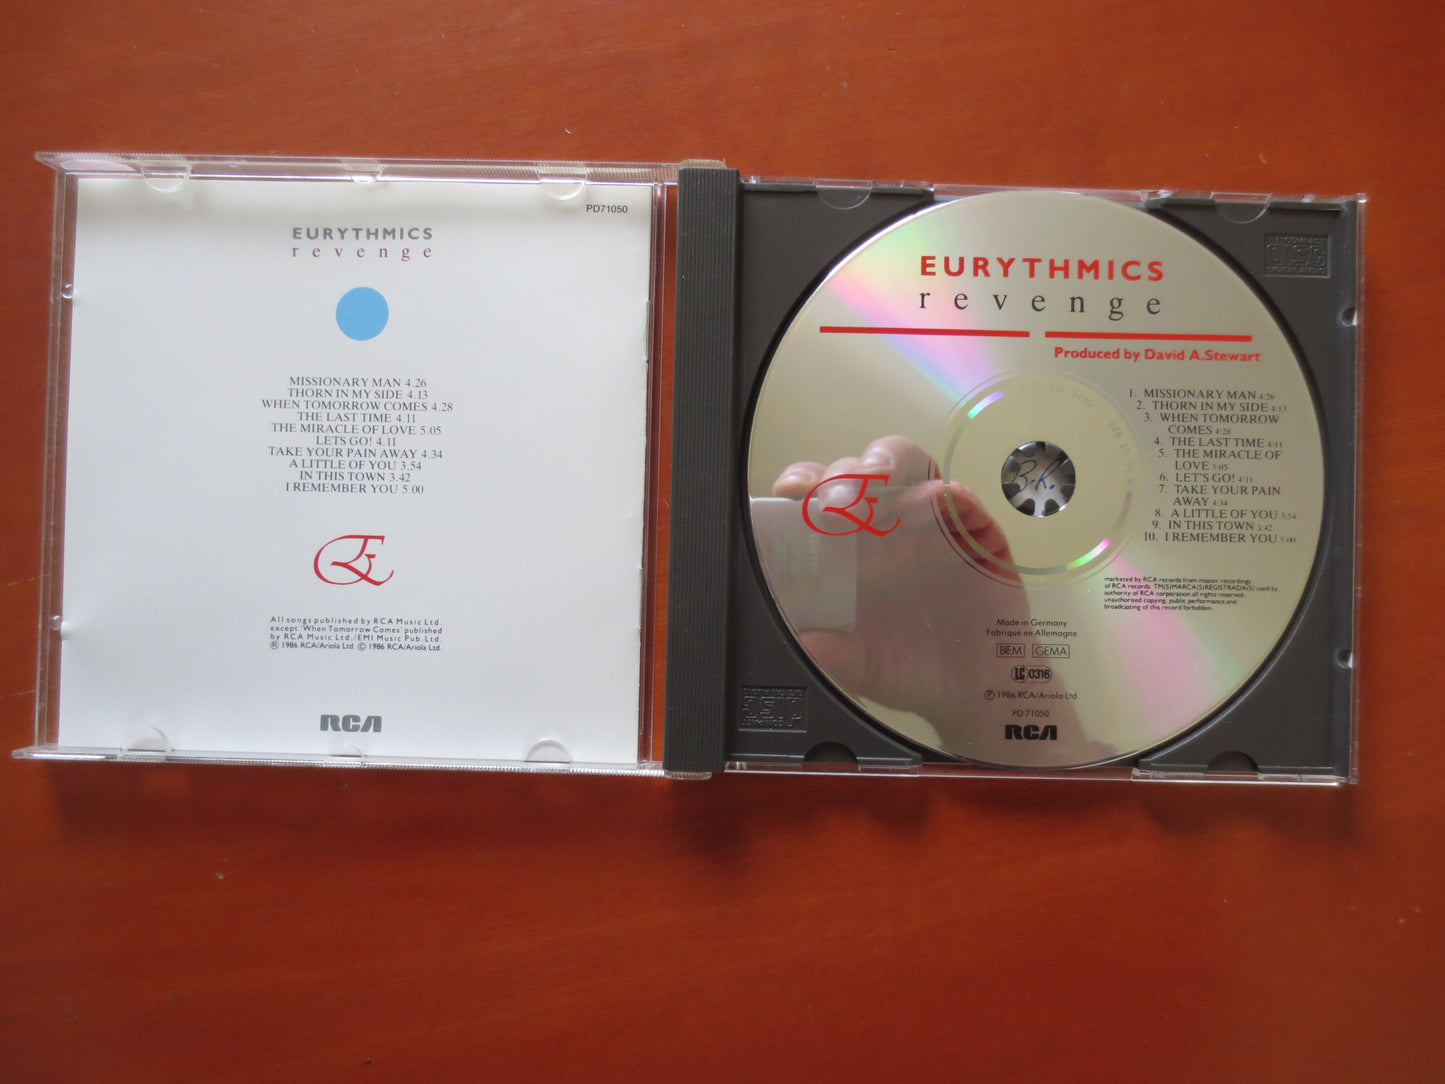 EURYTHMICS, Revenge, EURYTHMICS Cd, EURYTHMICS Lp, Rock Cd, Rock Music Cd, Vintage Compact Disc,  Pop Cd, 1986 Compact Discs